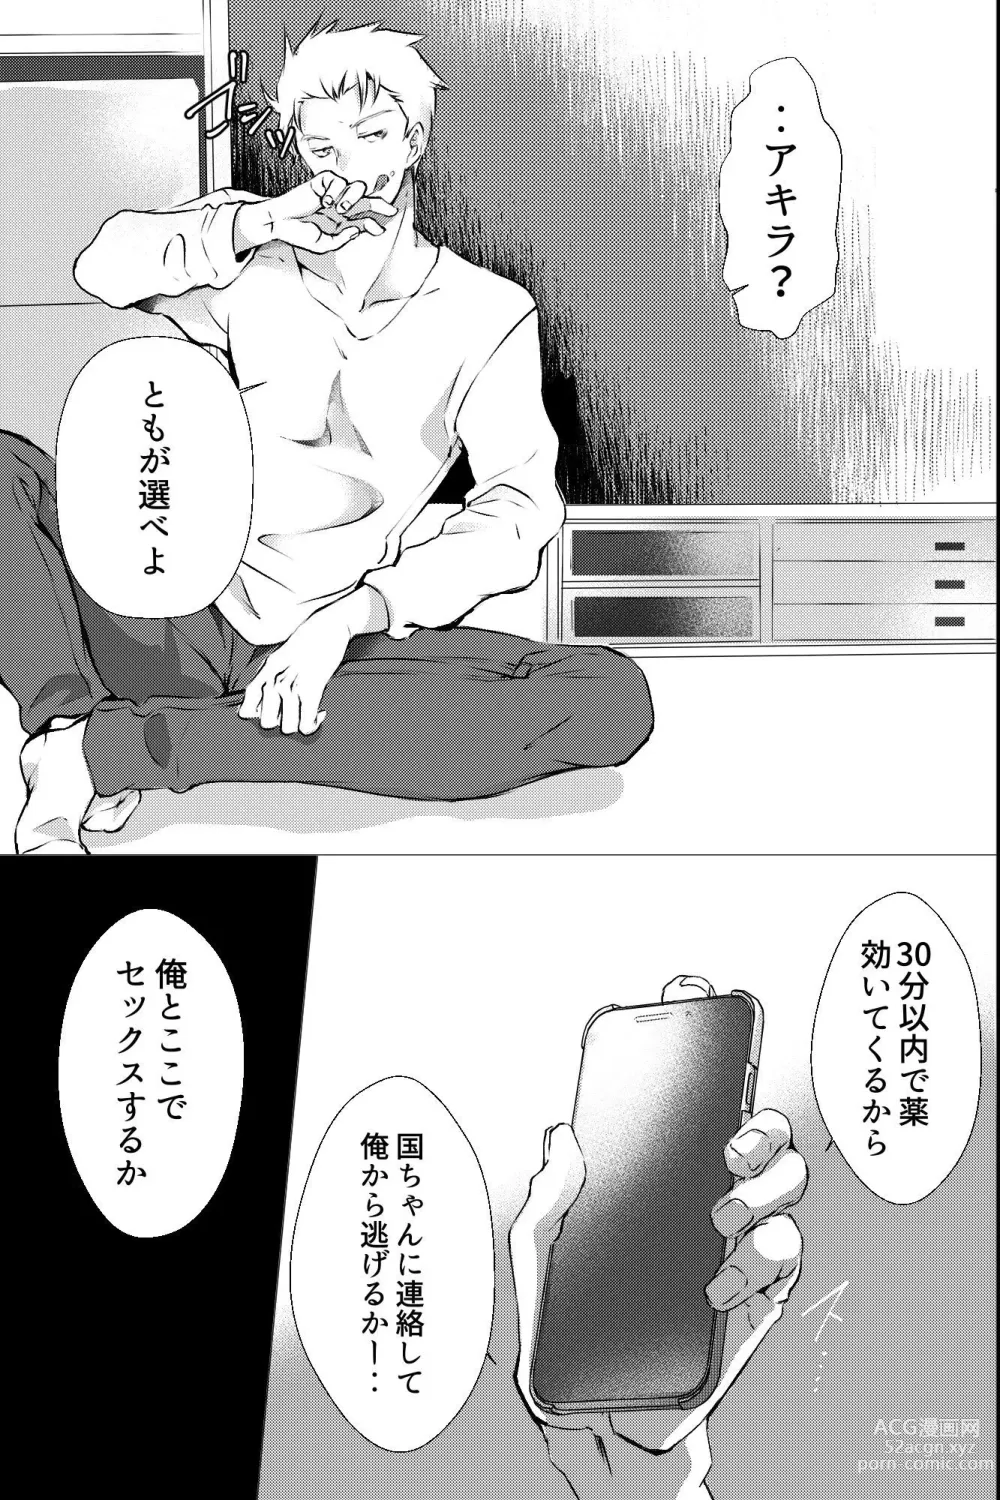 Page 16 of doujinshi 俺しか知らない親友のカオ。媚薬を親友に盛られたら